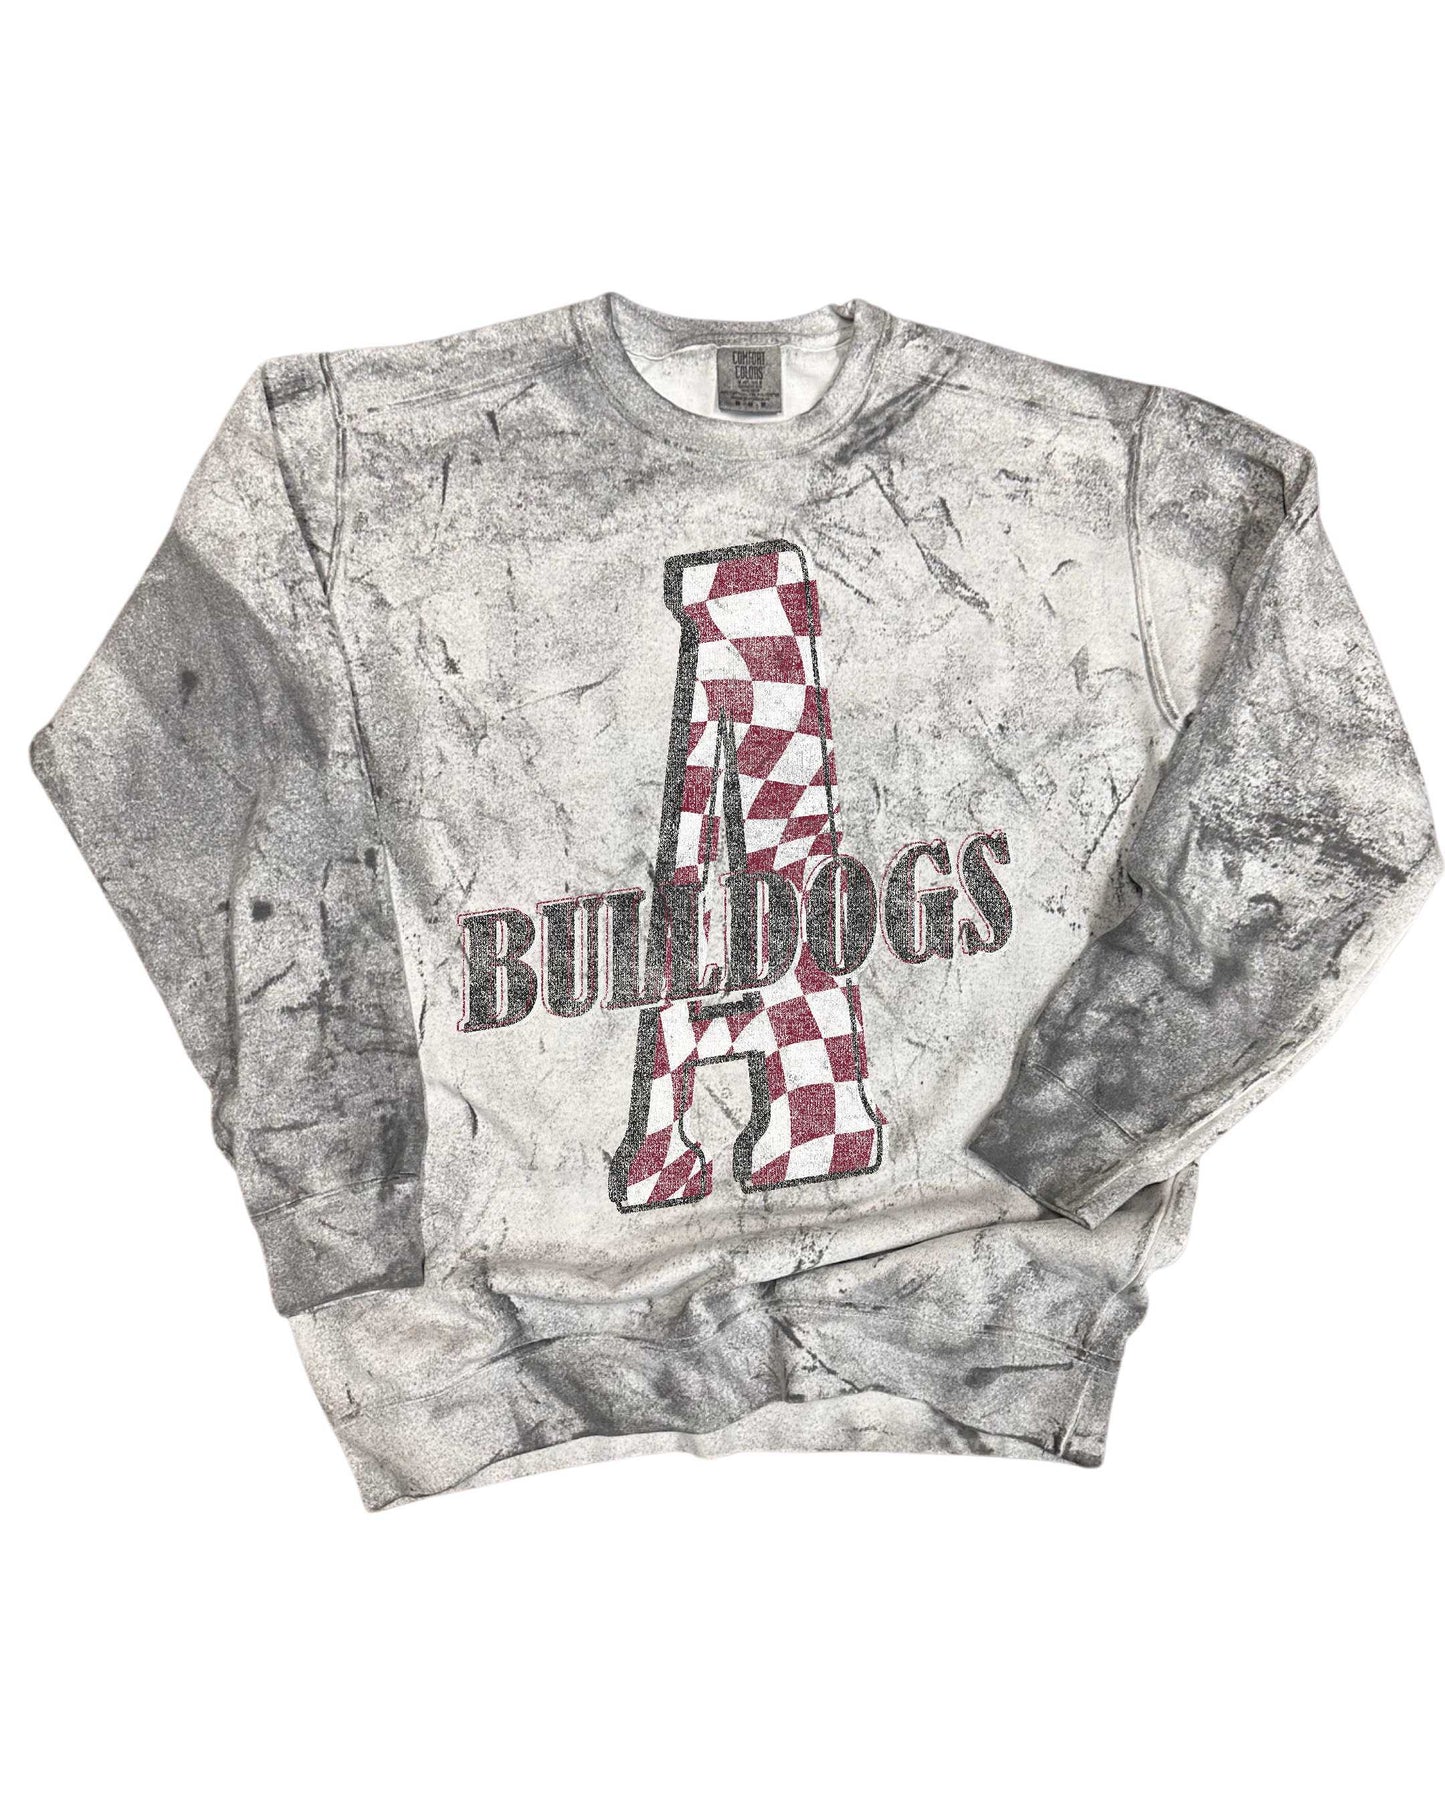 Avery Bulldogs Vintage Washed Spirit Sweatshirt